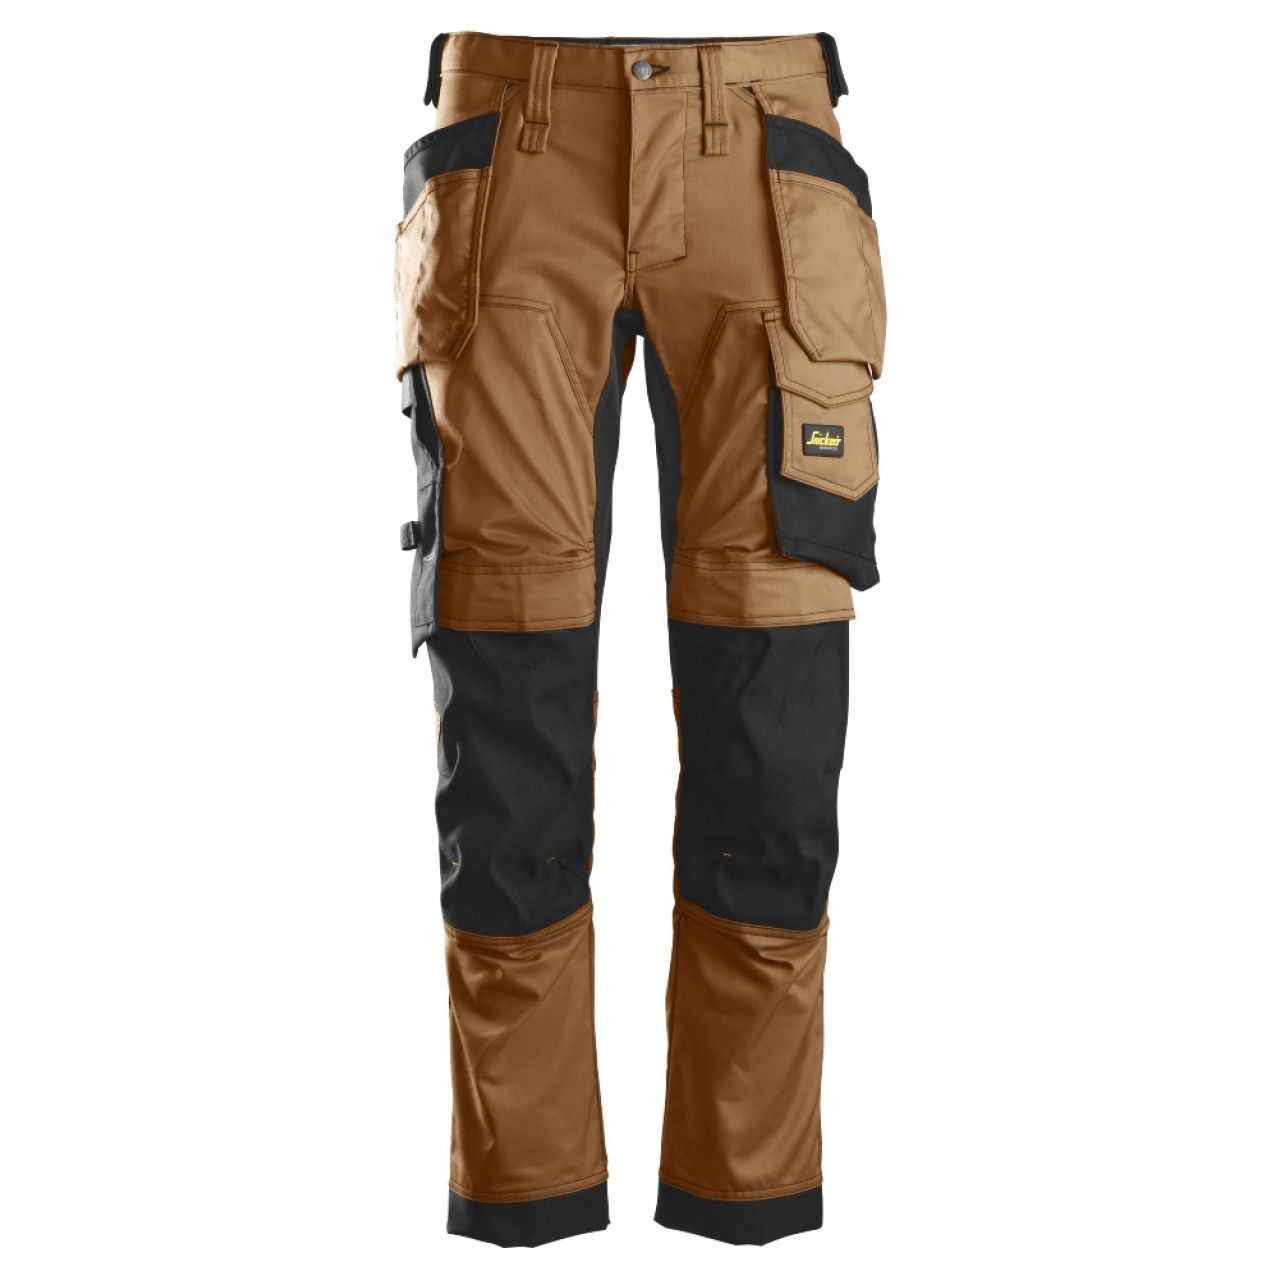 6241 Pantalones largos de trabajo elásticos con bolsillos flotantes AllroundWork marron-negro talla 92